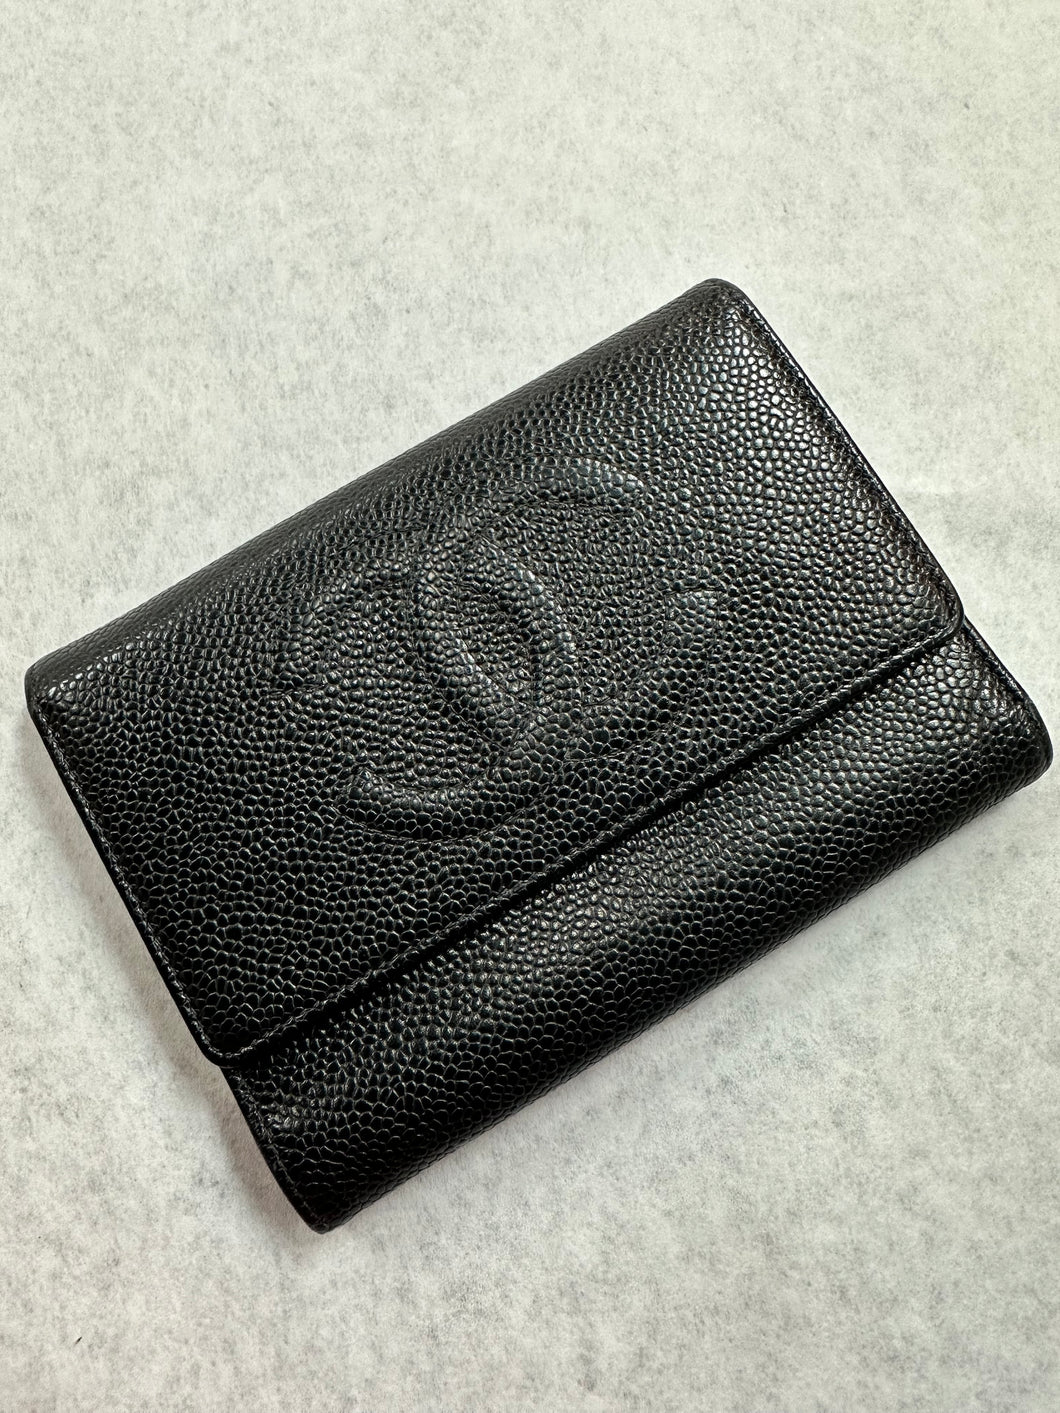 Authentic Chanel Black Caviar Tri-Fold Wallet